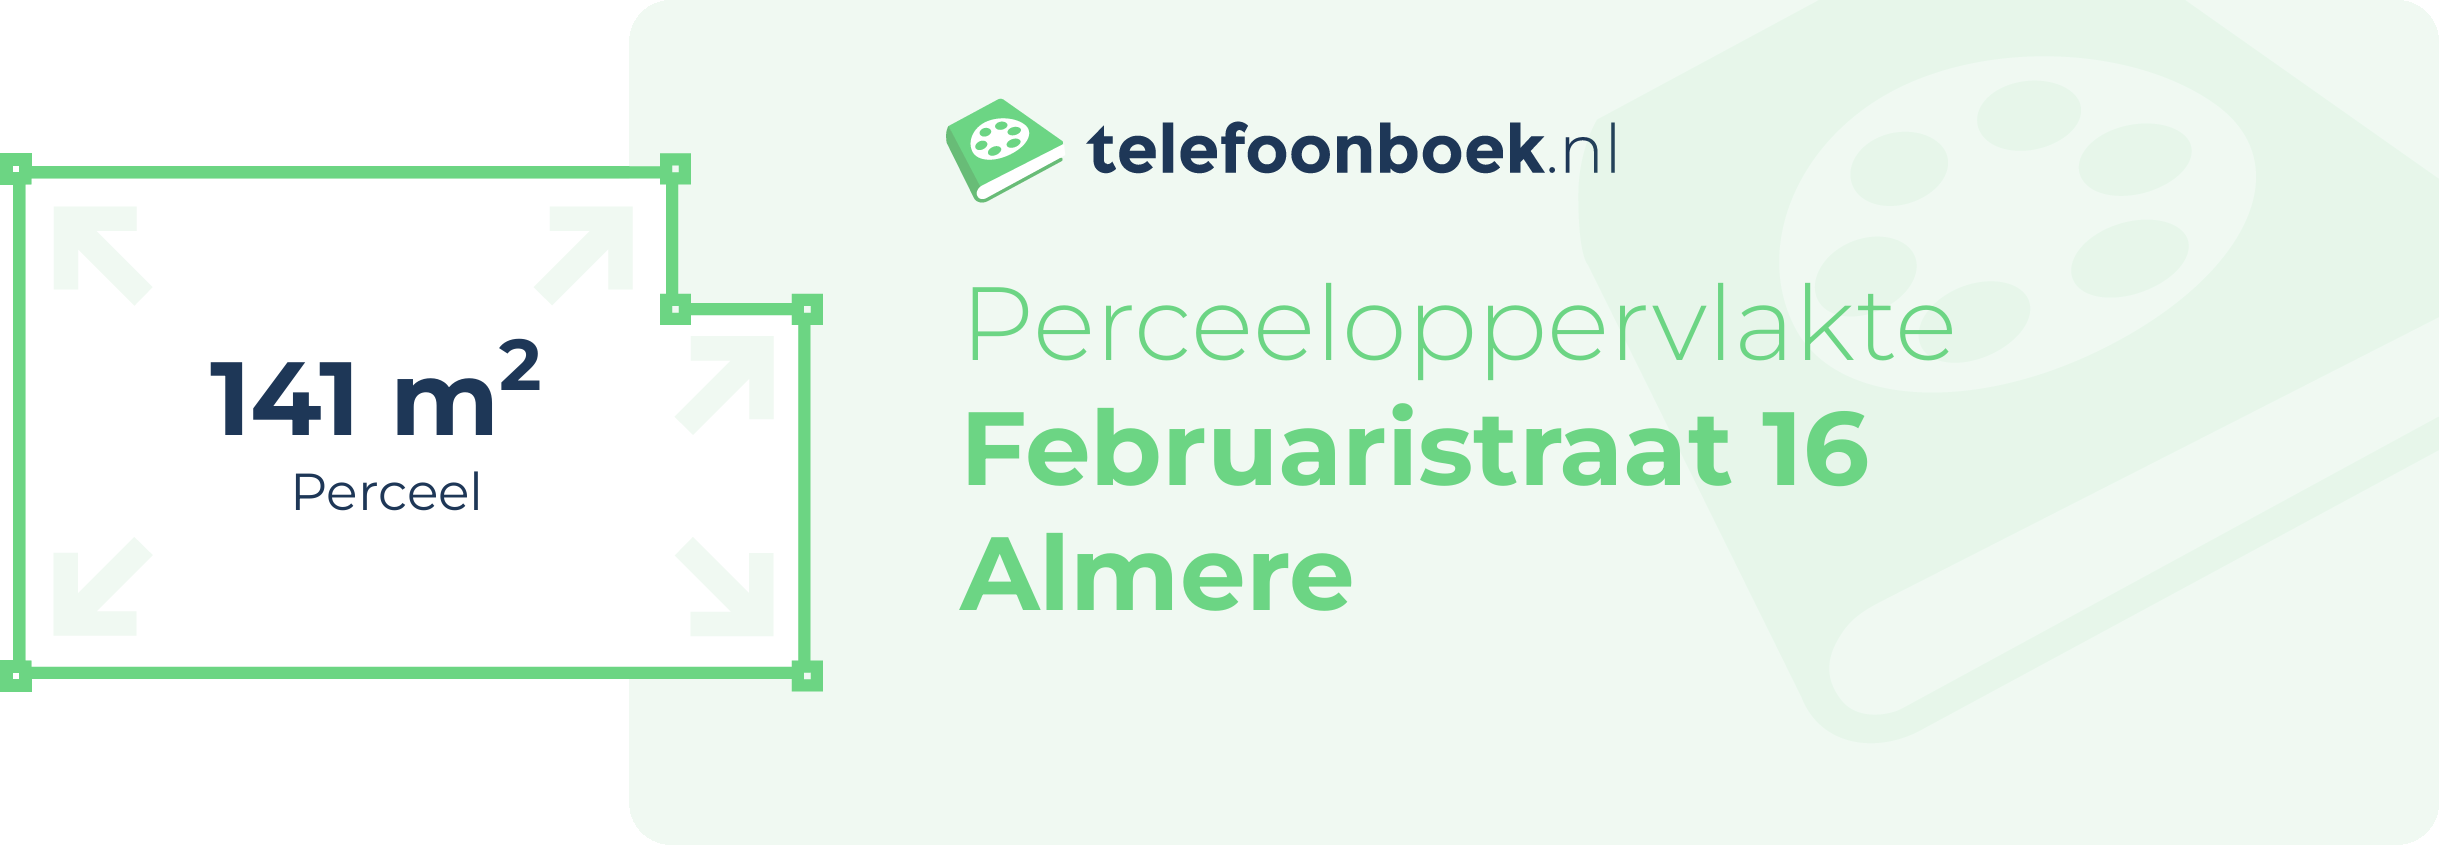 Perceeloppervlakte Februaristraat 16 Almere